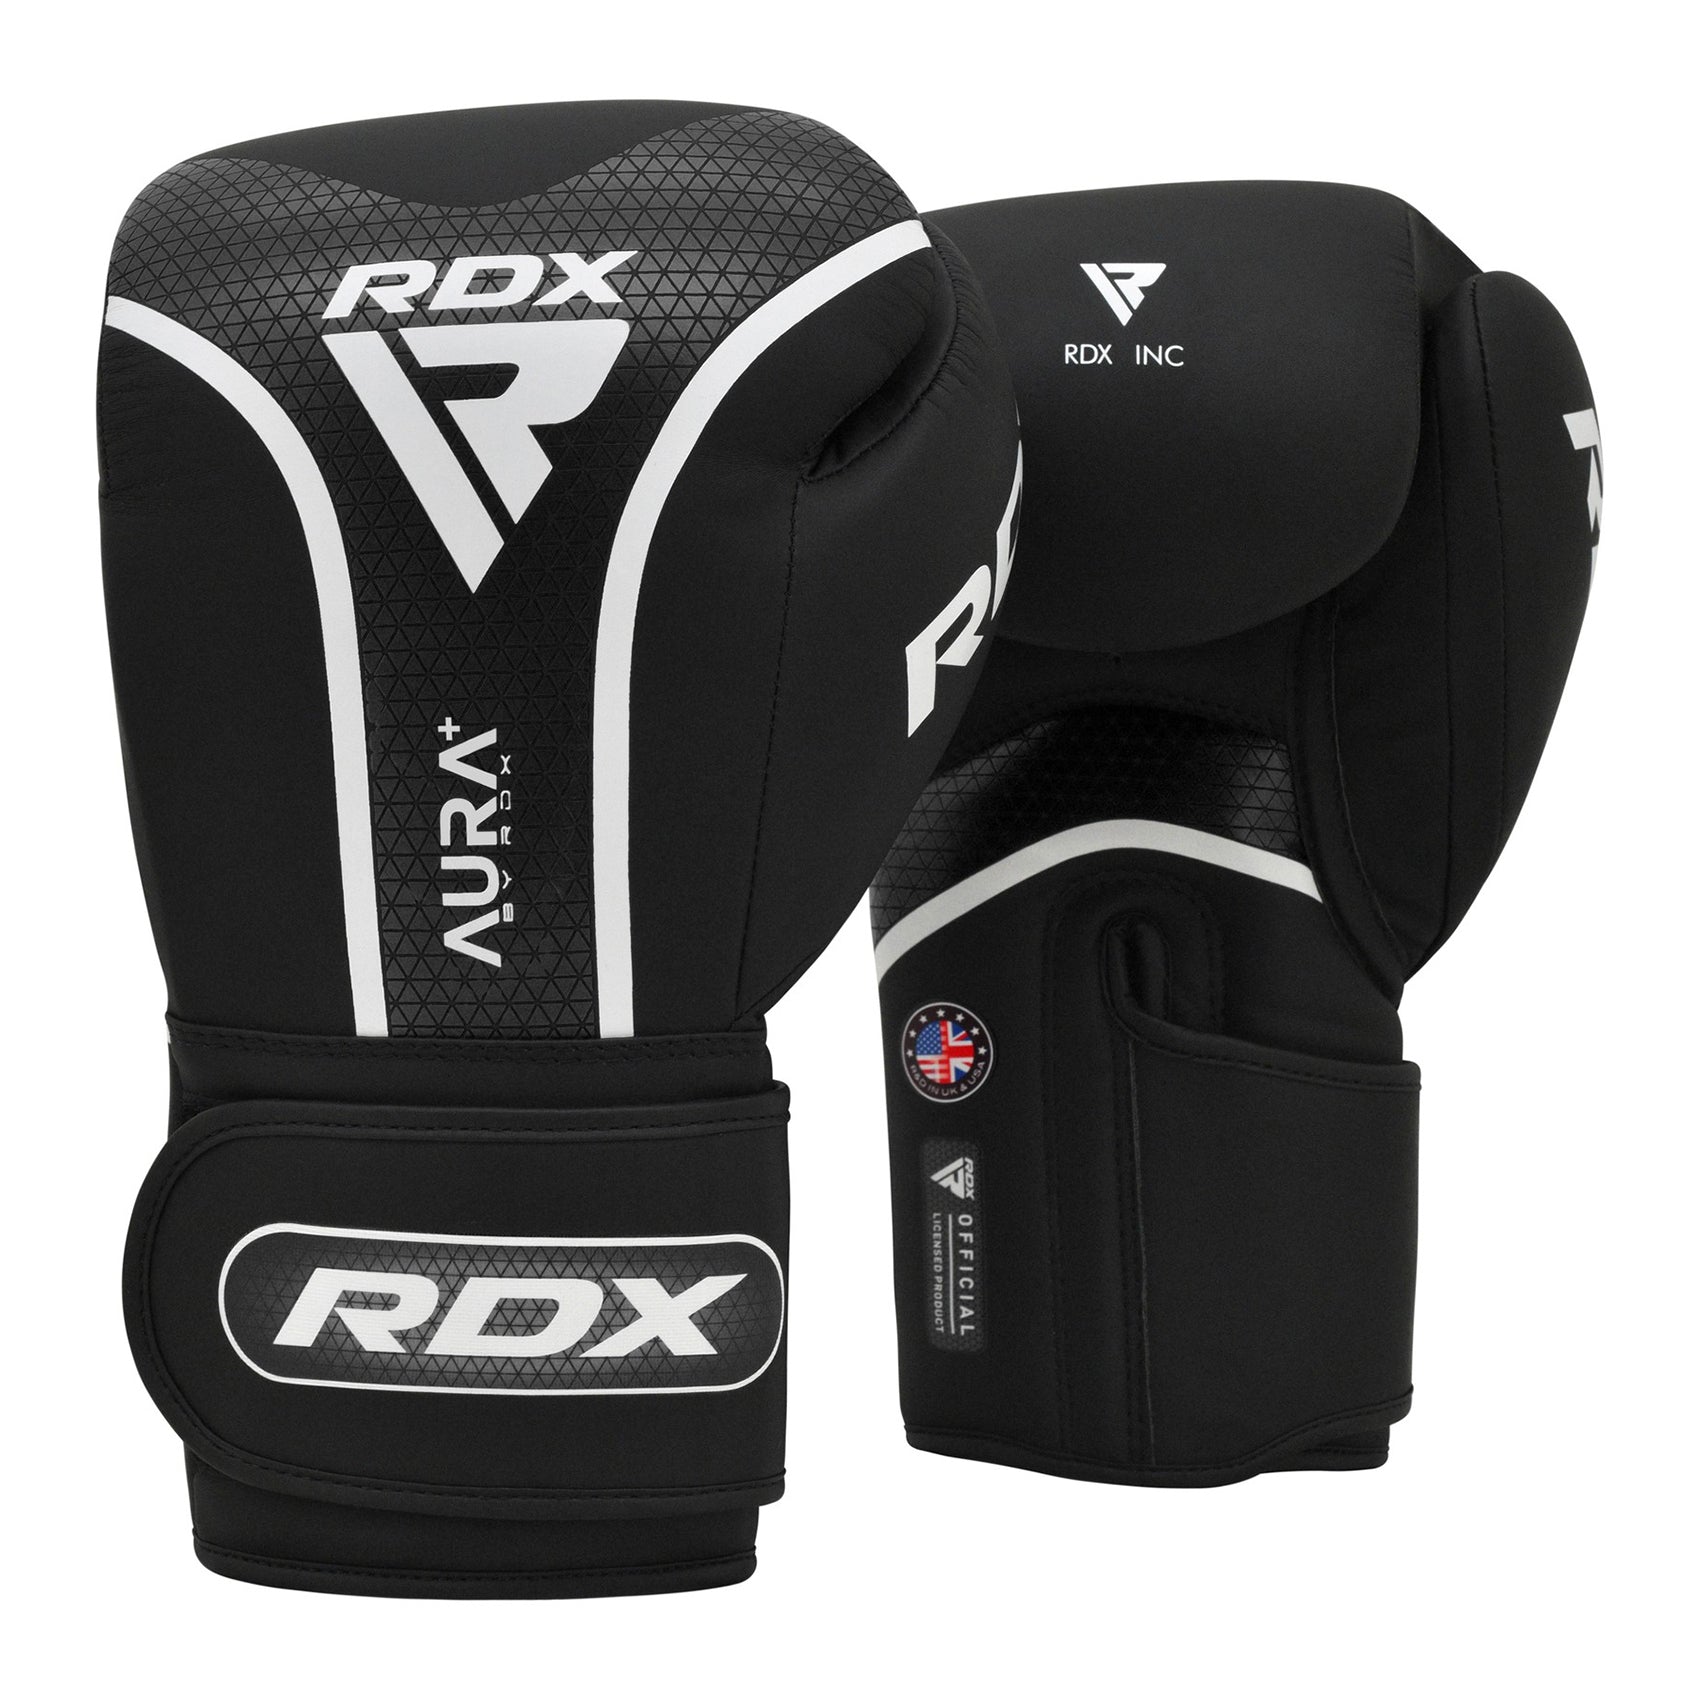 RDX T17 Aura Nova Tech Boxing Sparring Gloves - Matte Black - 16oz - Shock Absorbing Foam, Moisture Wicking for Heavy Punching Bag Training, Kickboxing, Muay Thai, Sparring - Pro-Distributing